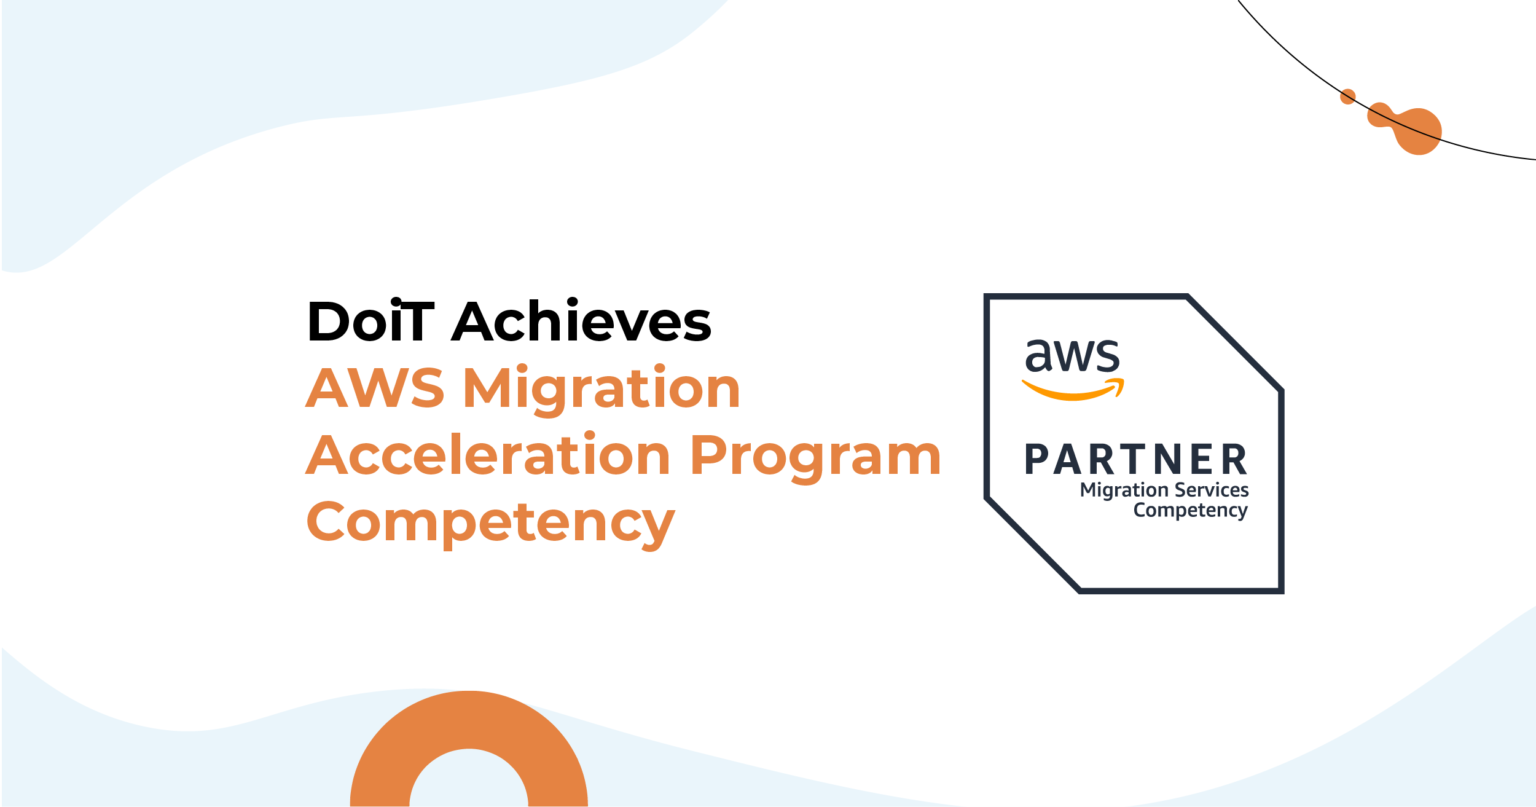 AWS Migration Acceleration Program Competency